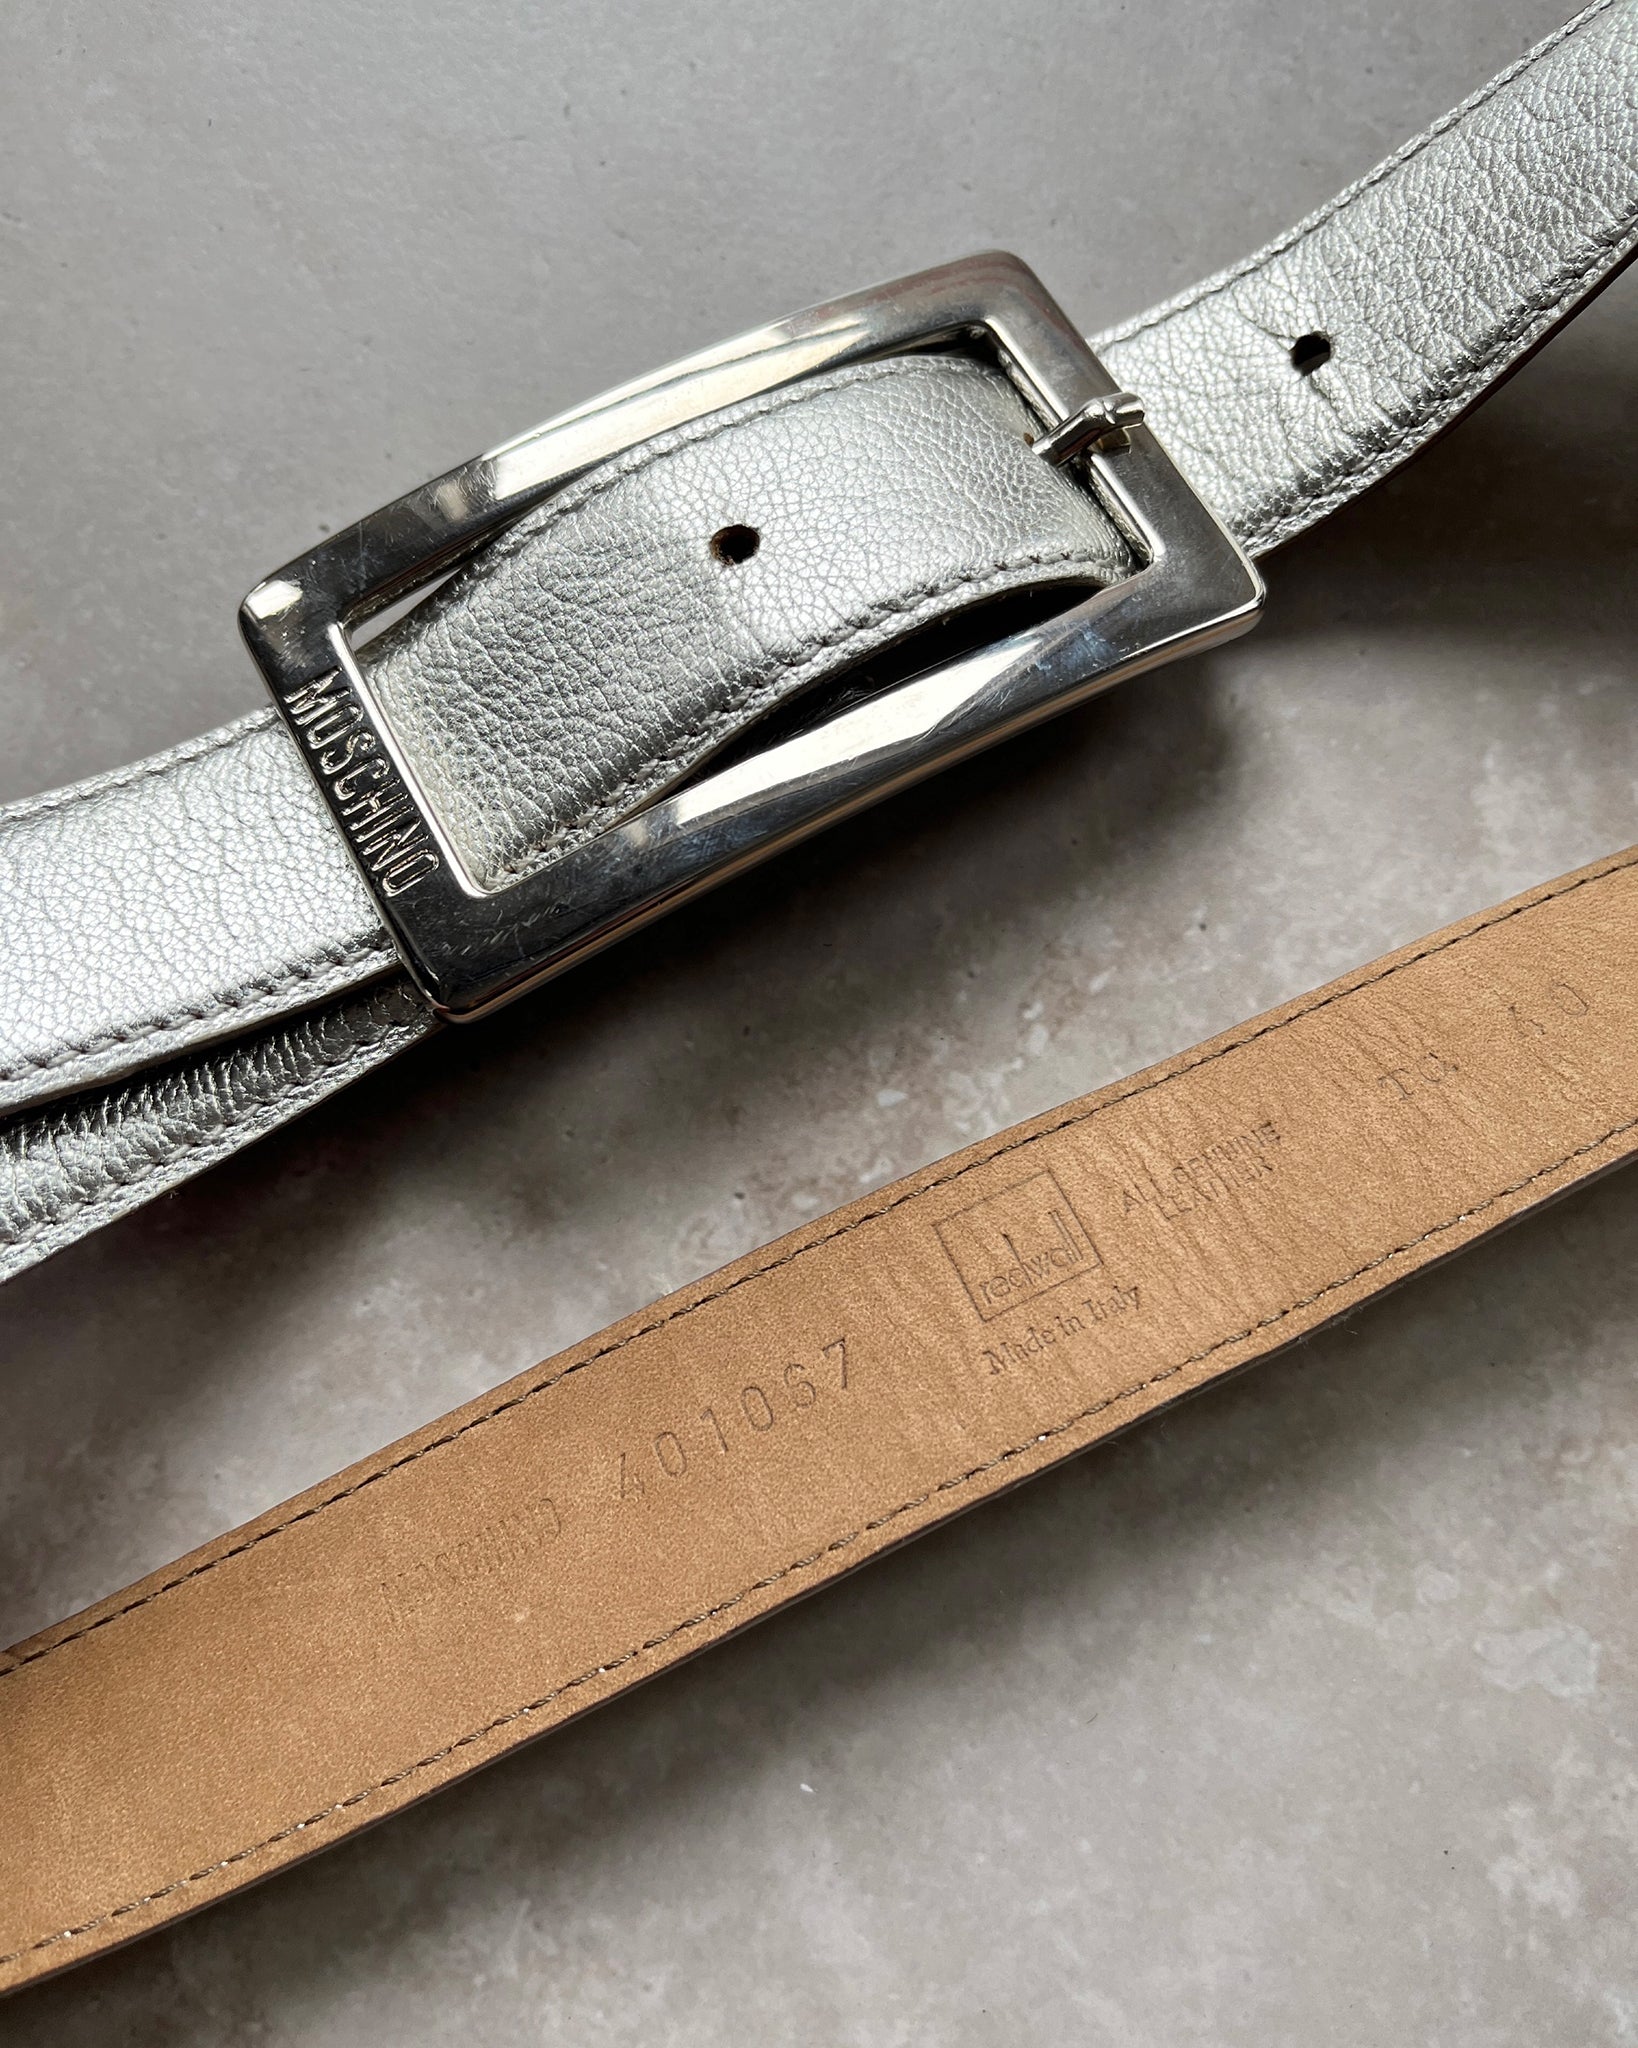 Zara Men's Reversible Leather Belt